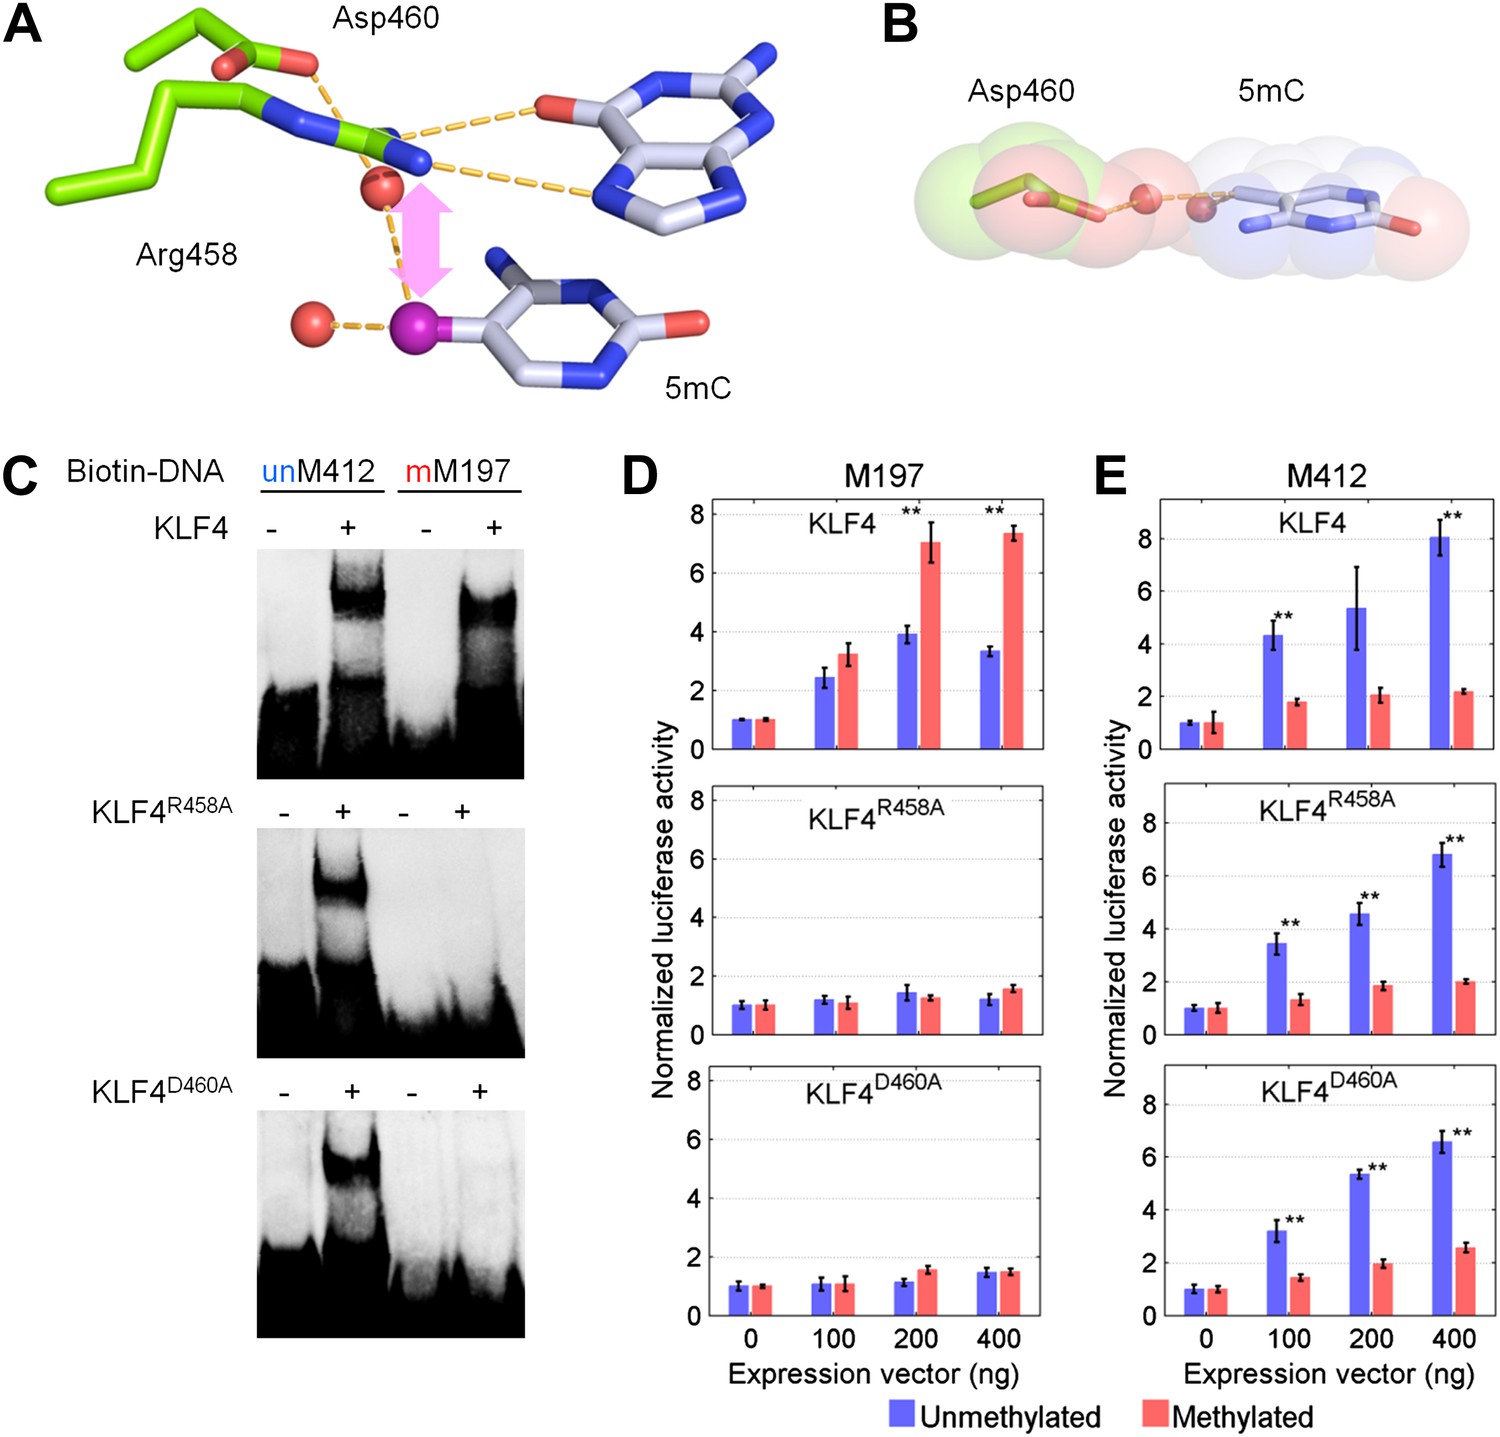 Modeling methyl-sensitive transcription factor motifs with an